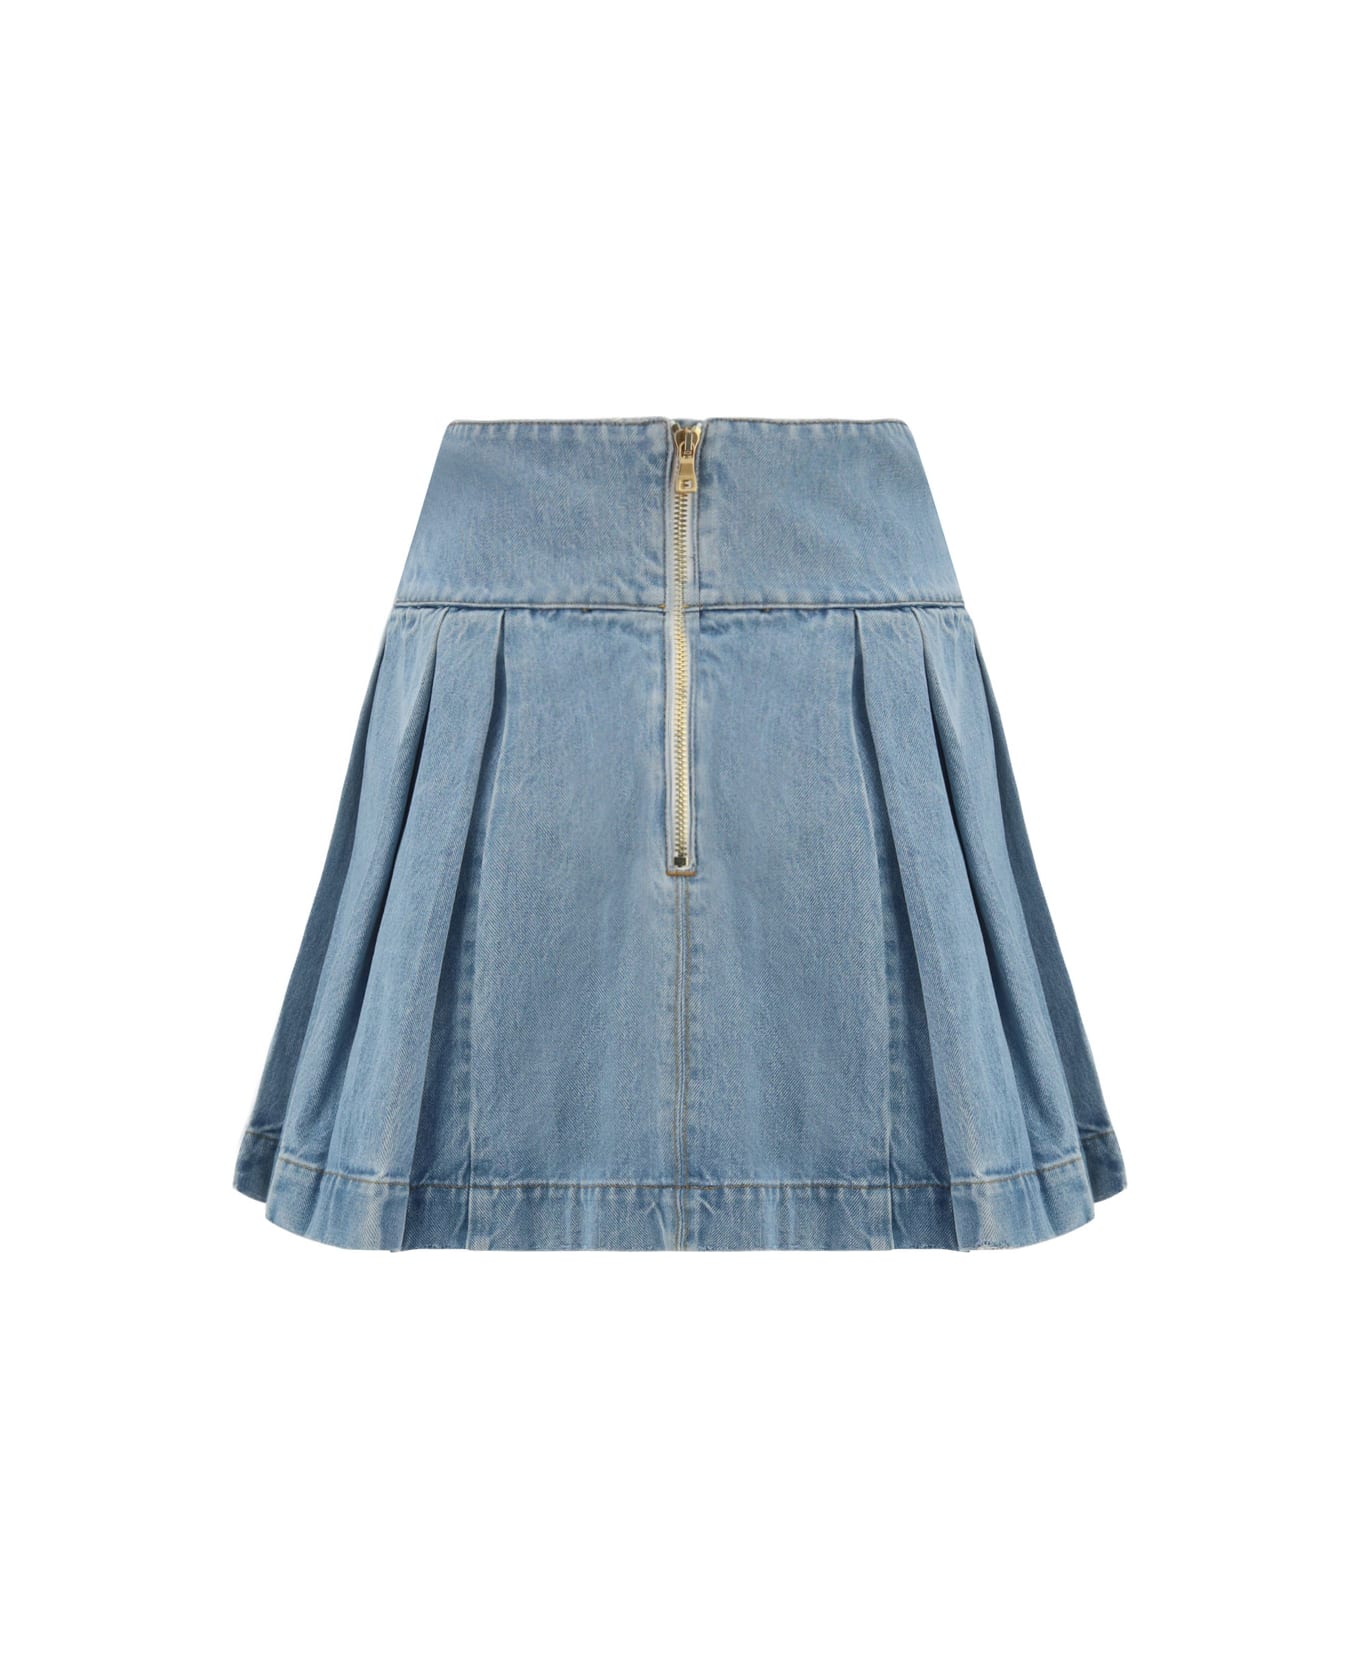 Balmain Skirt - Bleu Jean Claire